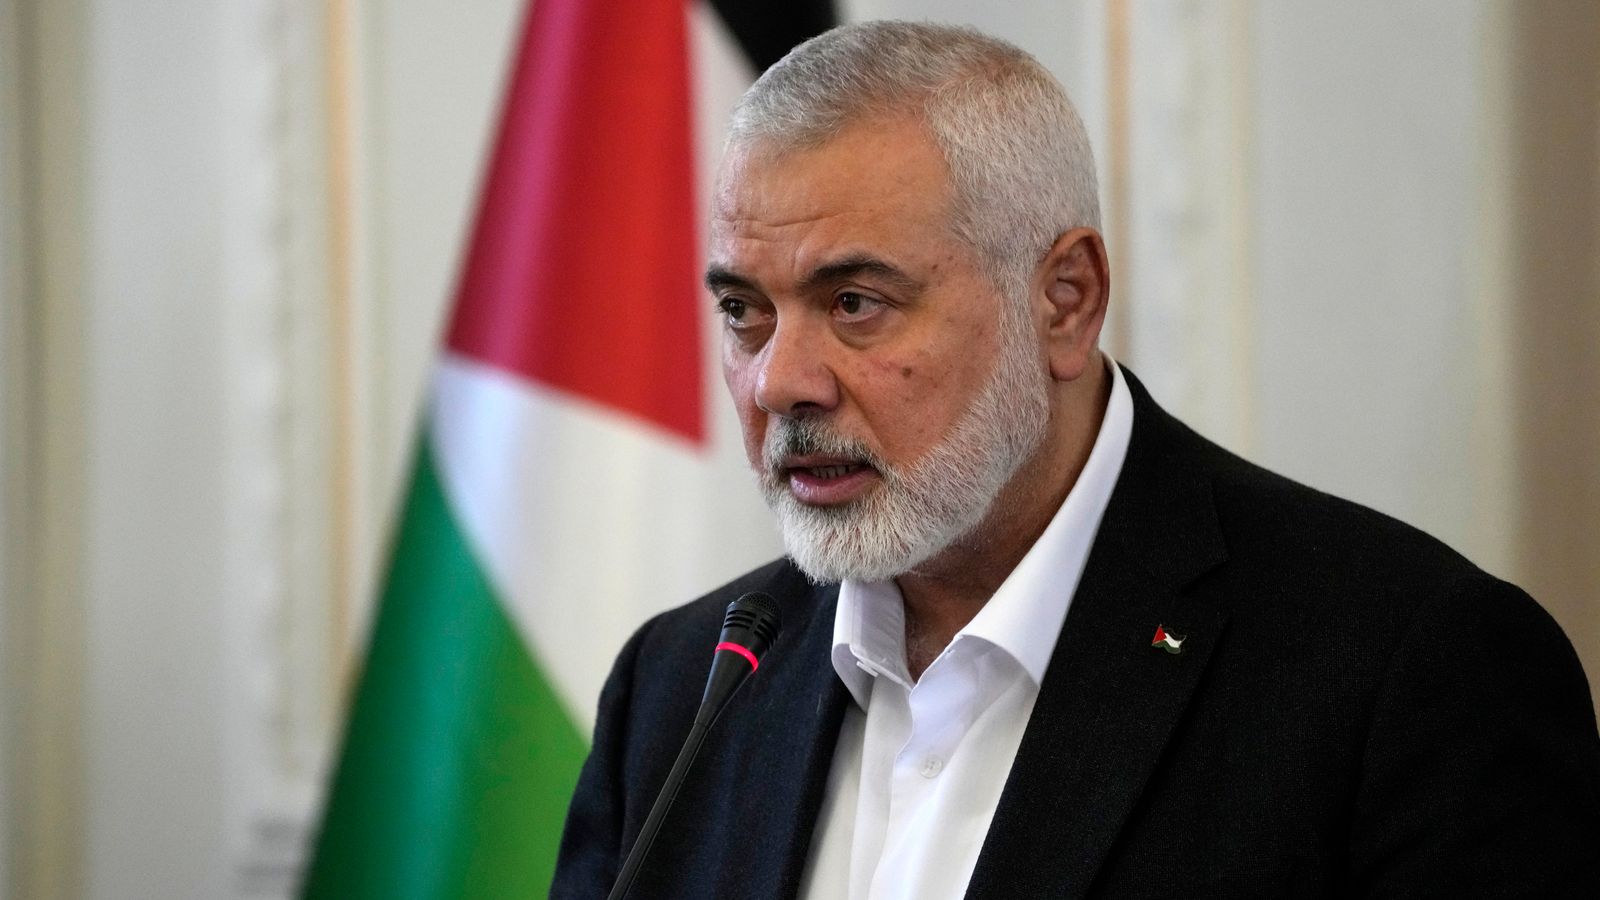 Three sons of Hamas leader Ismail Haniyeh killed in Israeli airstrike in Gaza